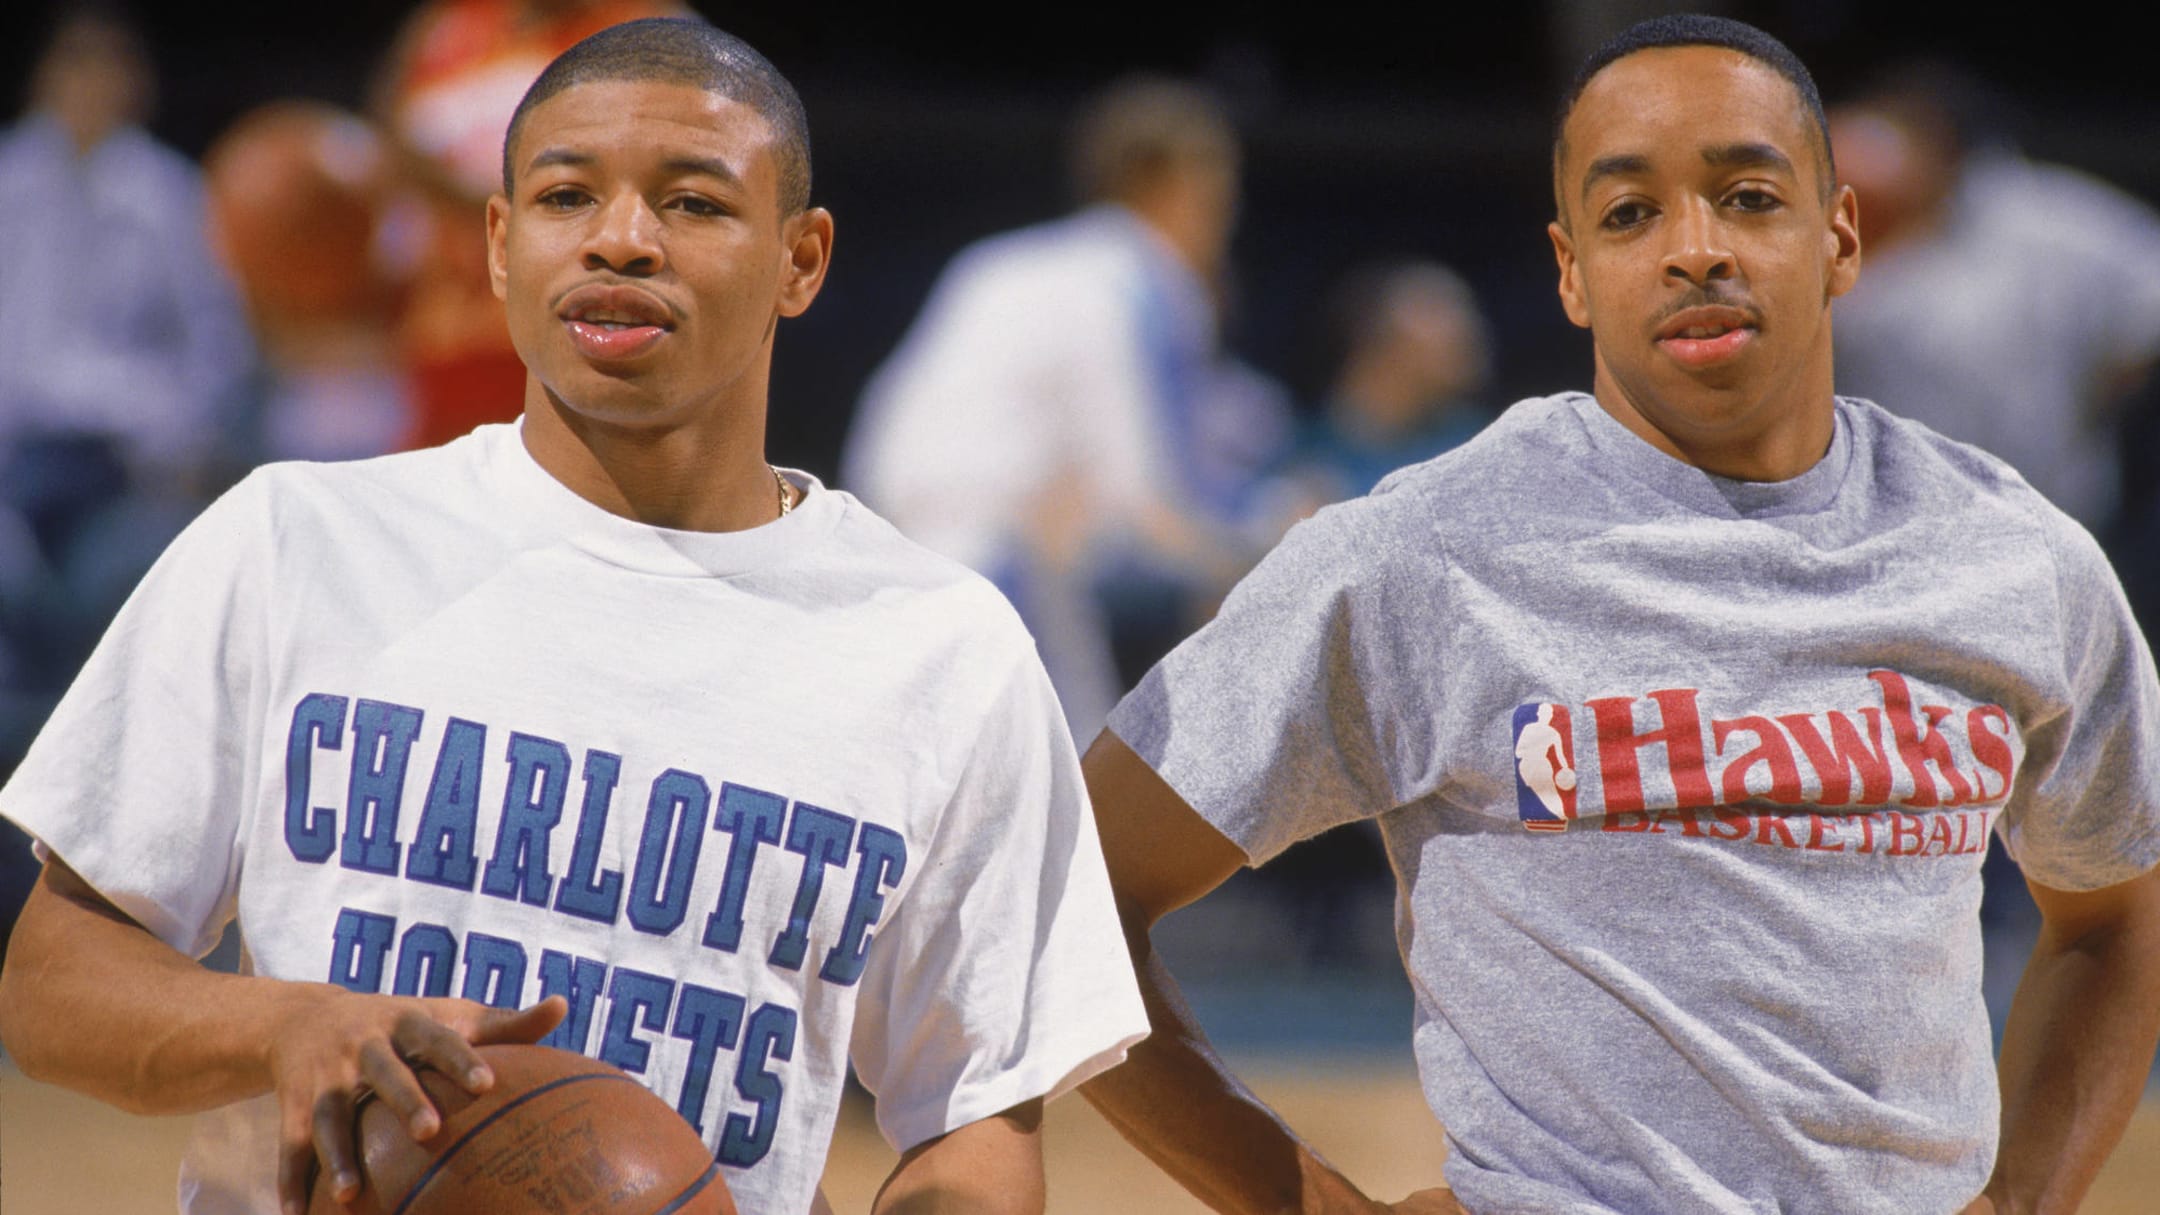 Oakland twins make history during NBA Draft, Richmond Free Press